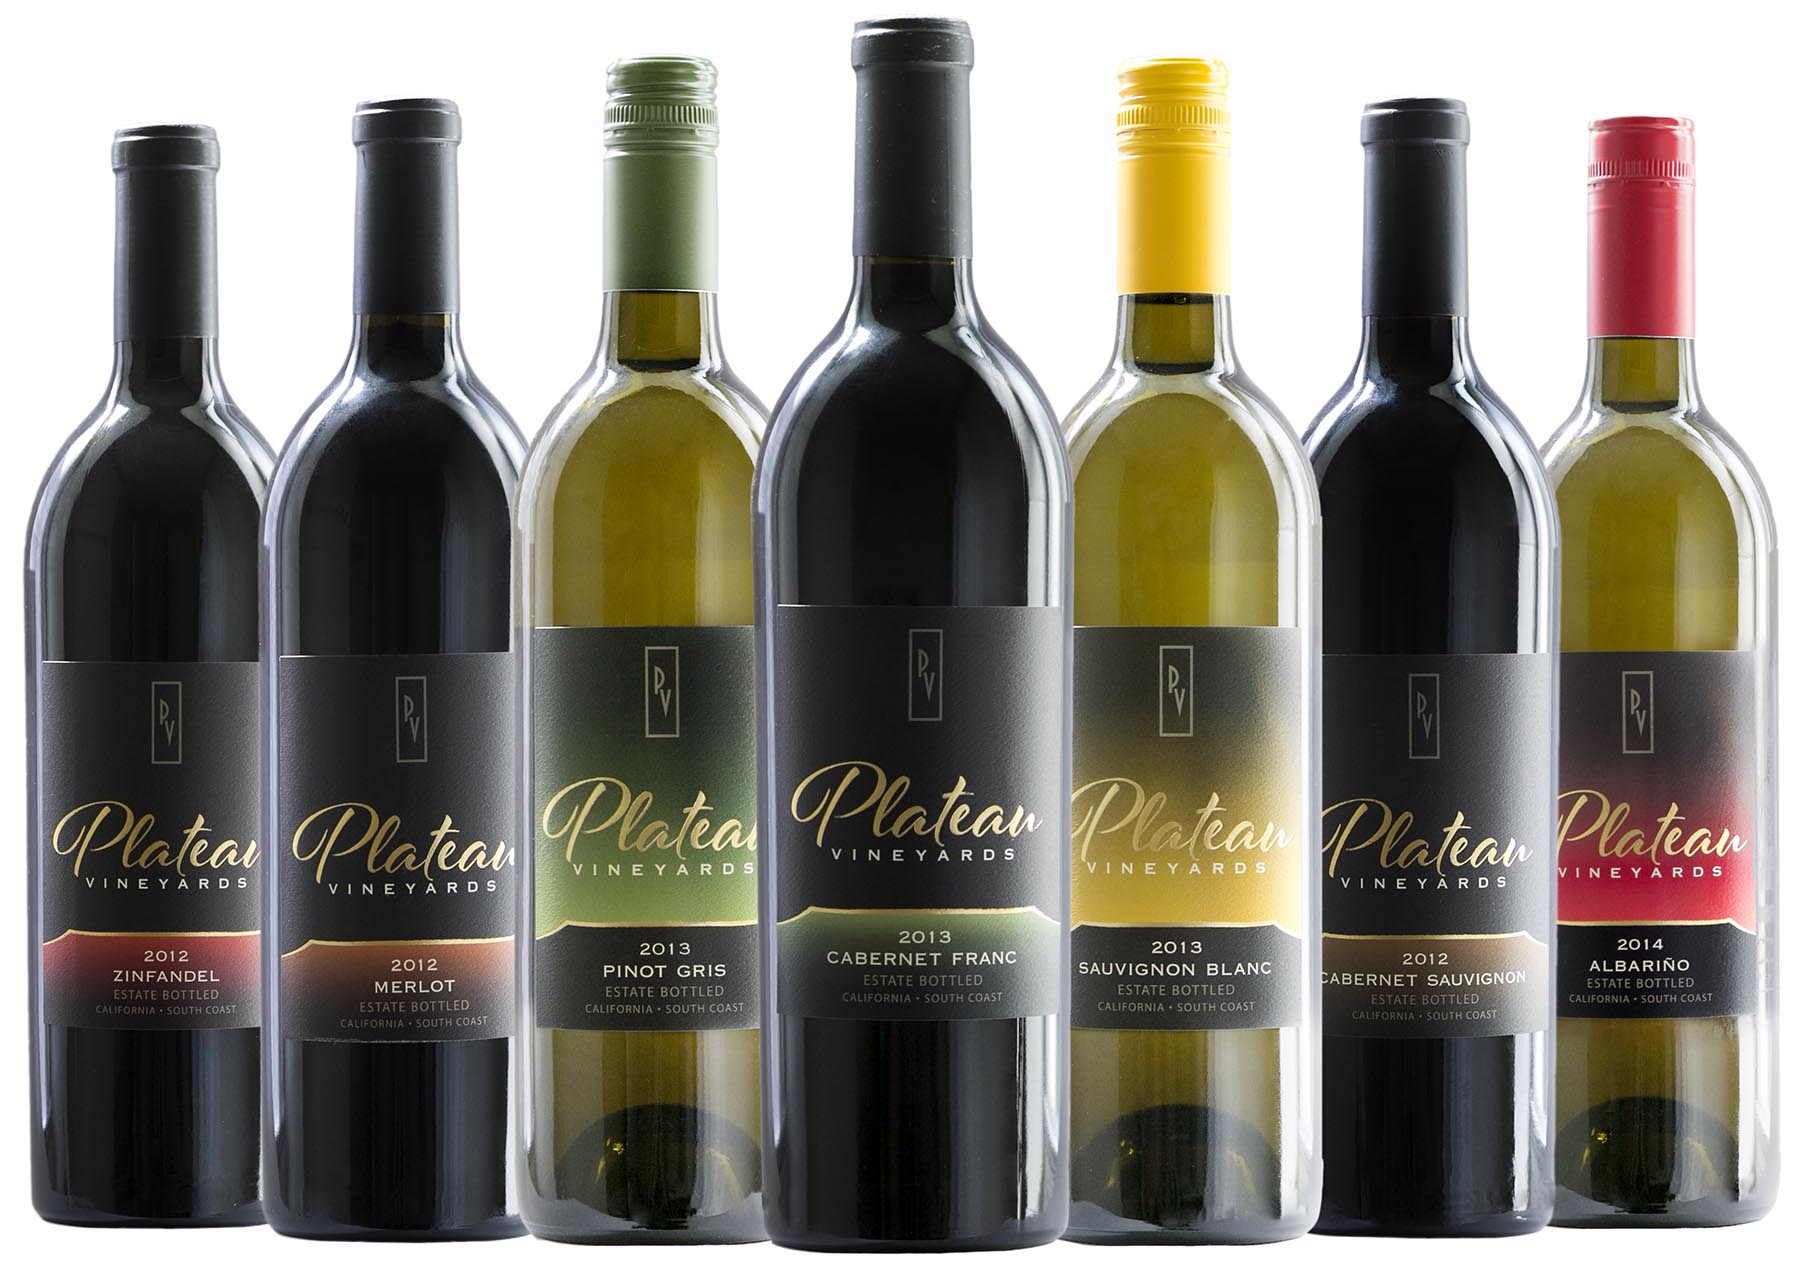 Plateau Vineyards wines